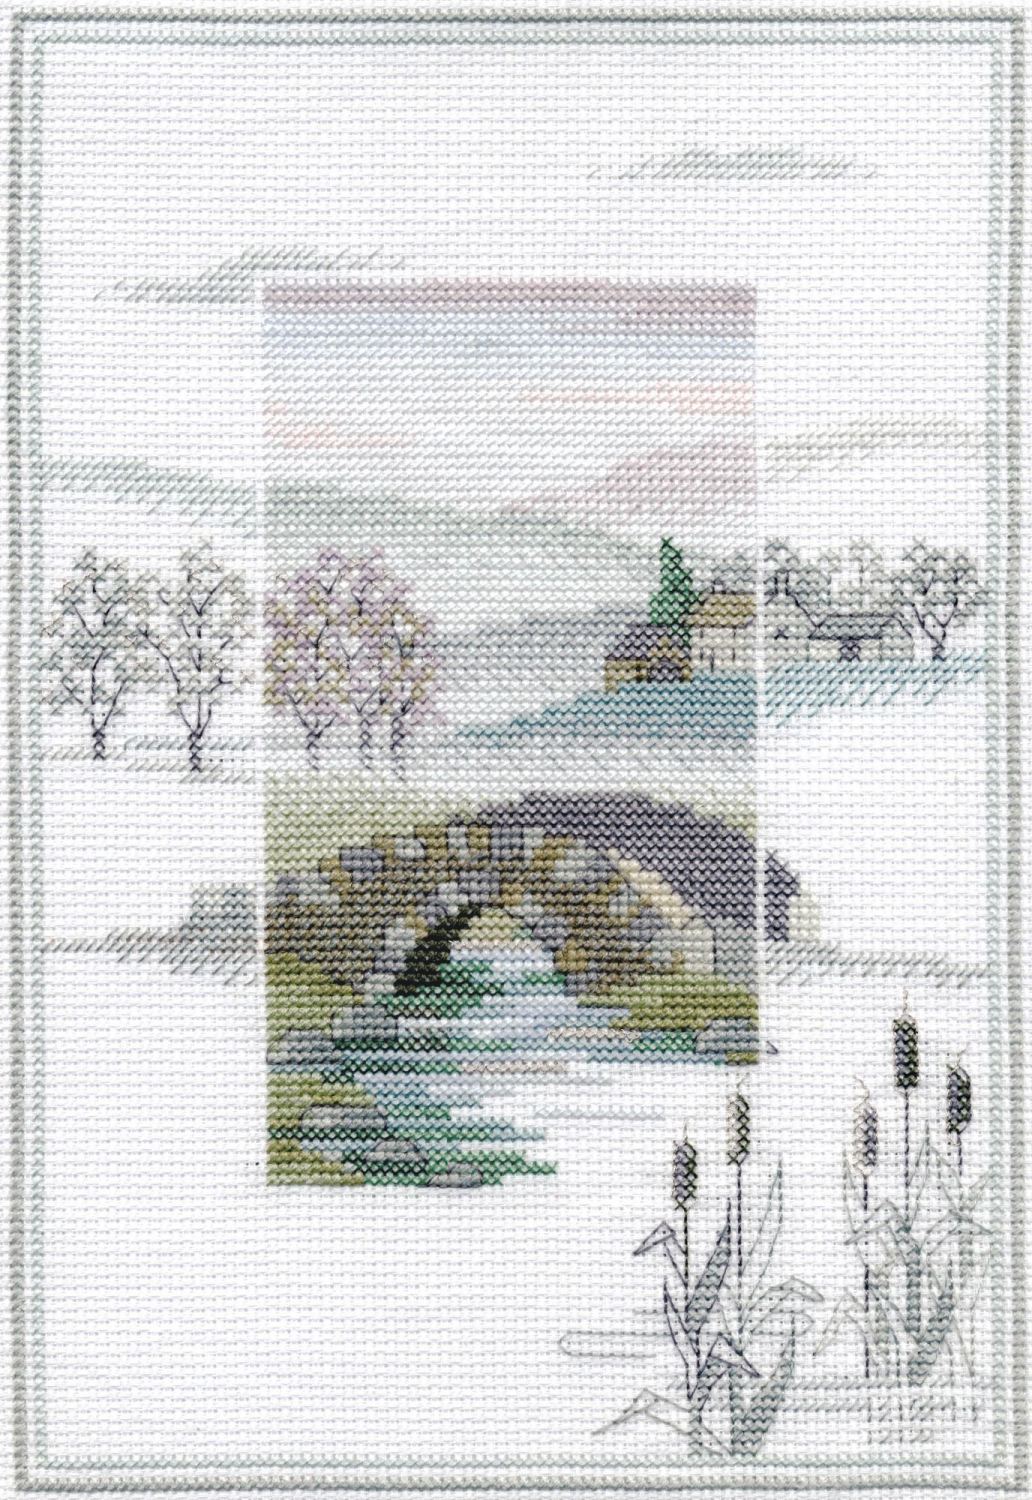 Winter Bridge - Misty Mornings Cross Stitch